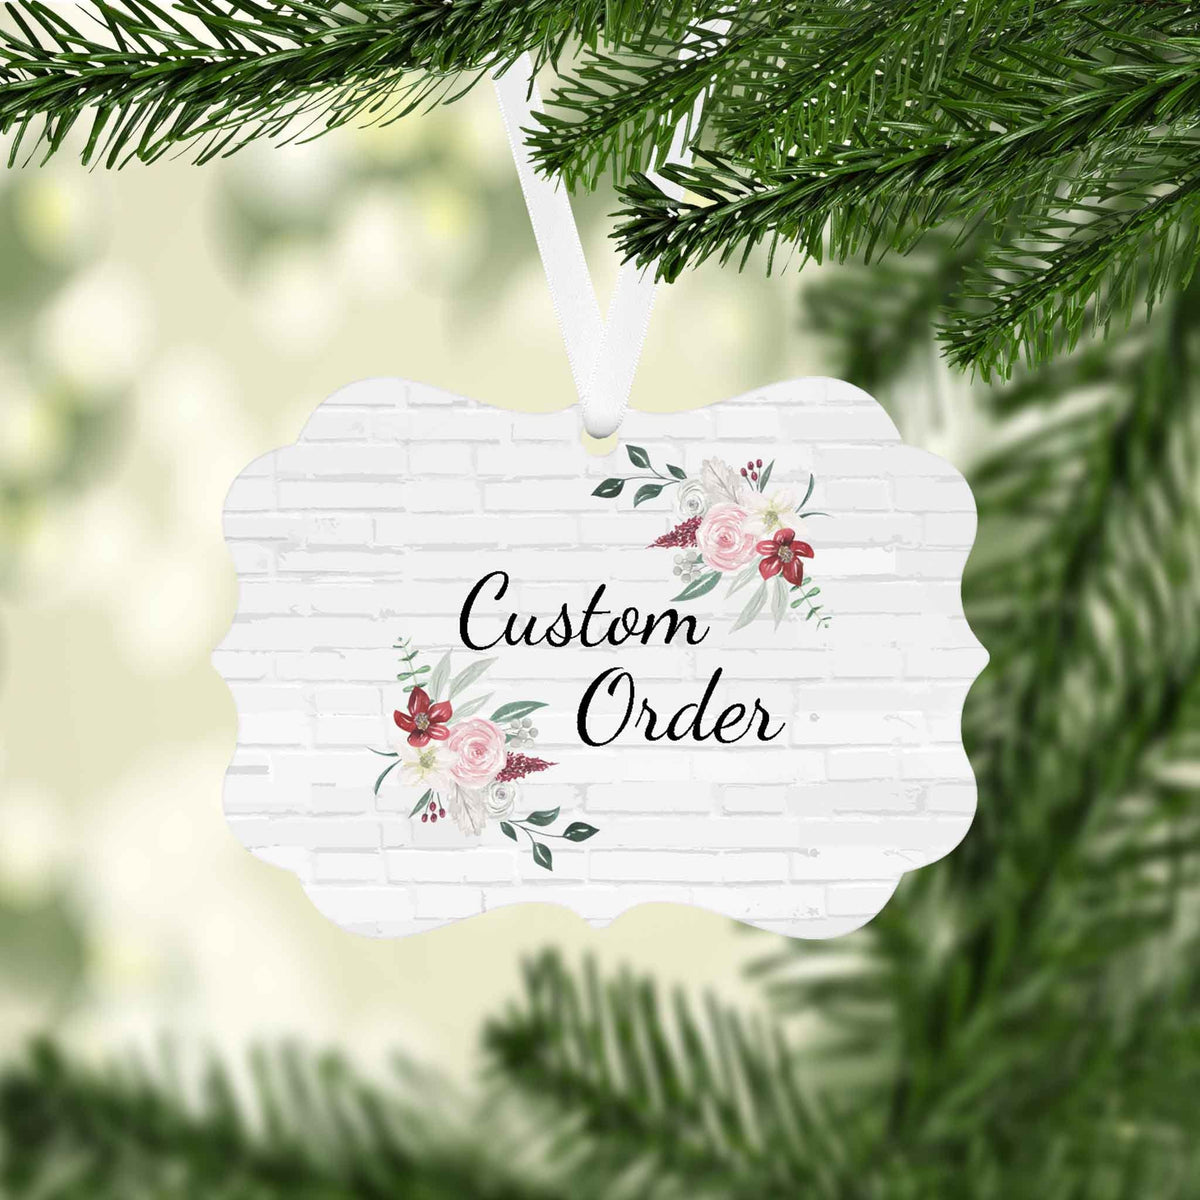 Photo Holiday Ornaments | Personalized Christmas Ornaments | Custom Order Hardboard